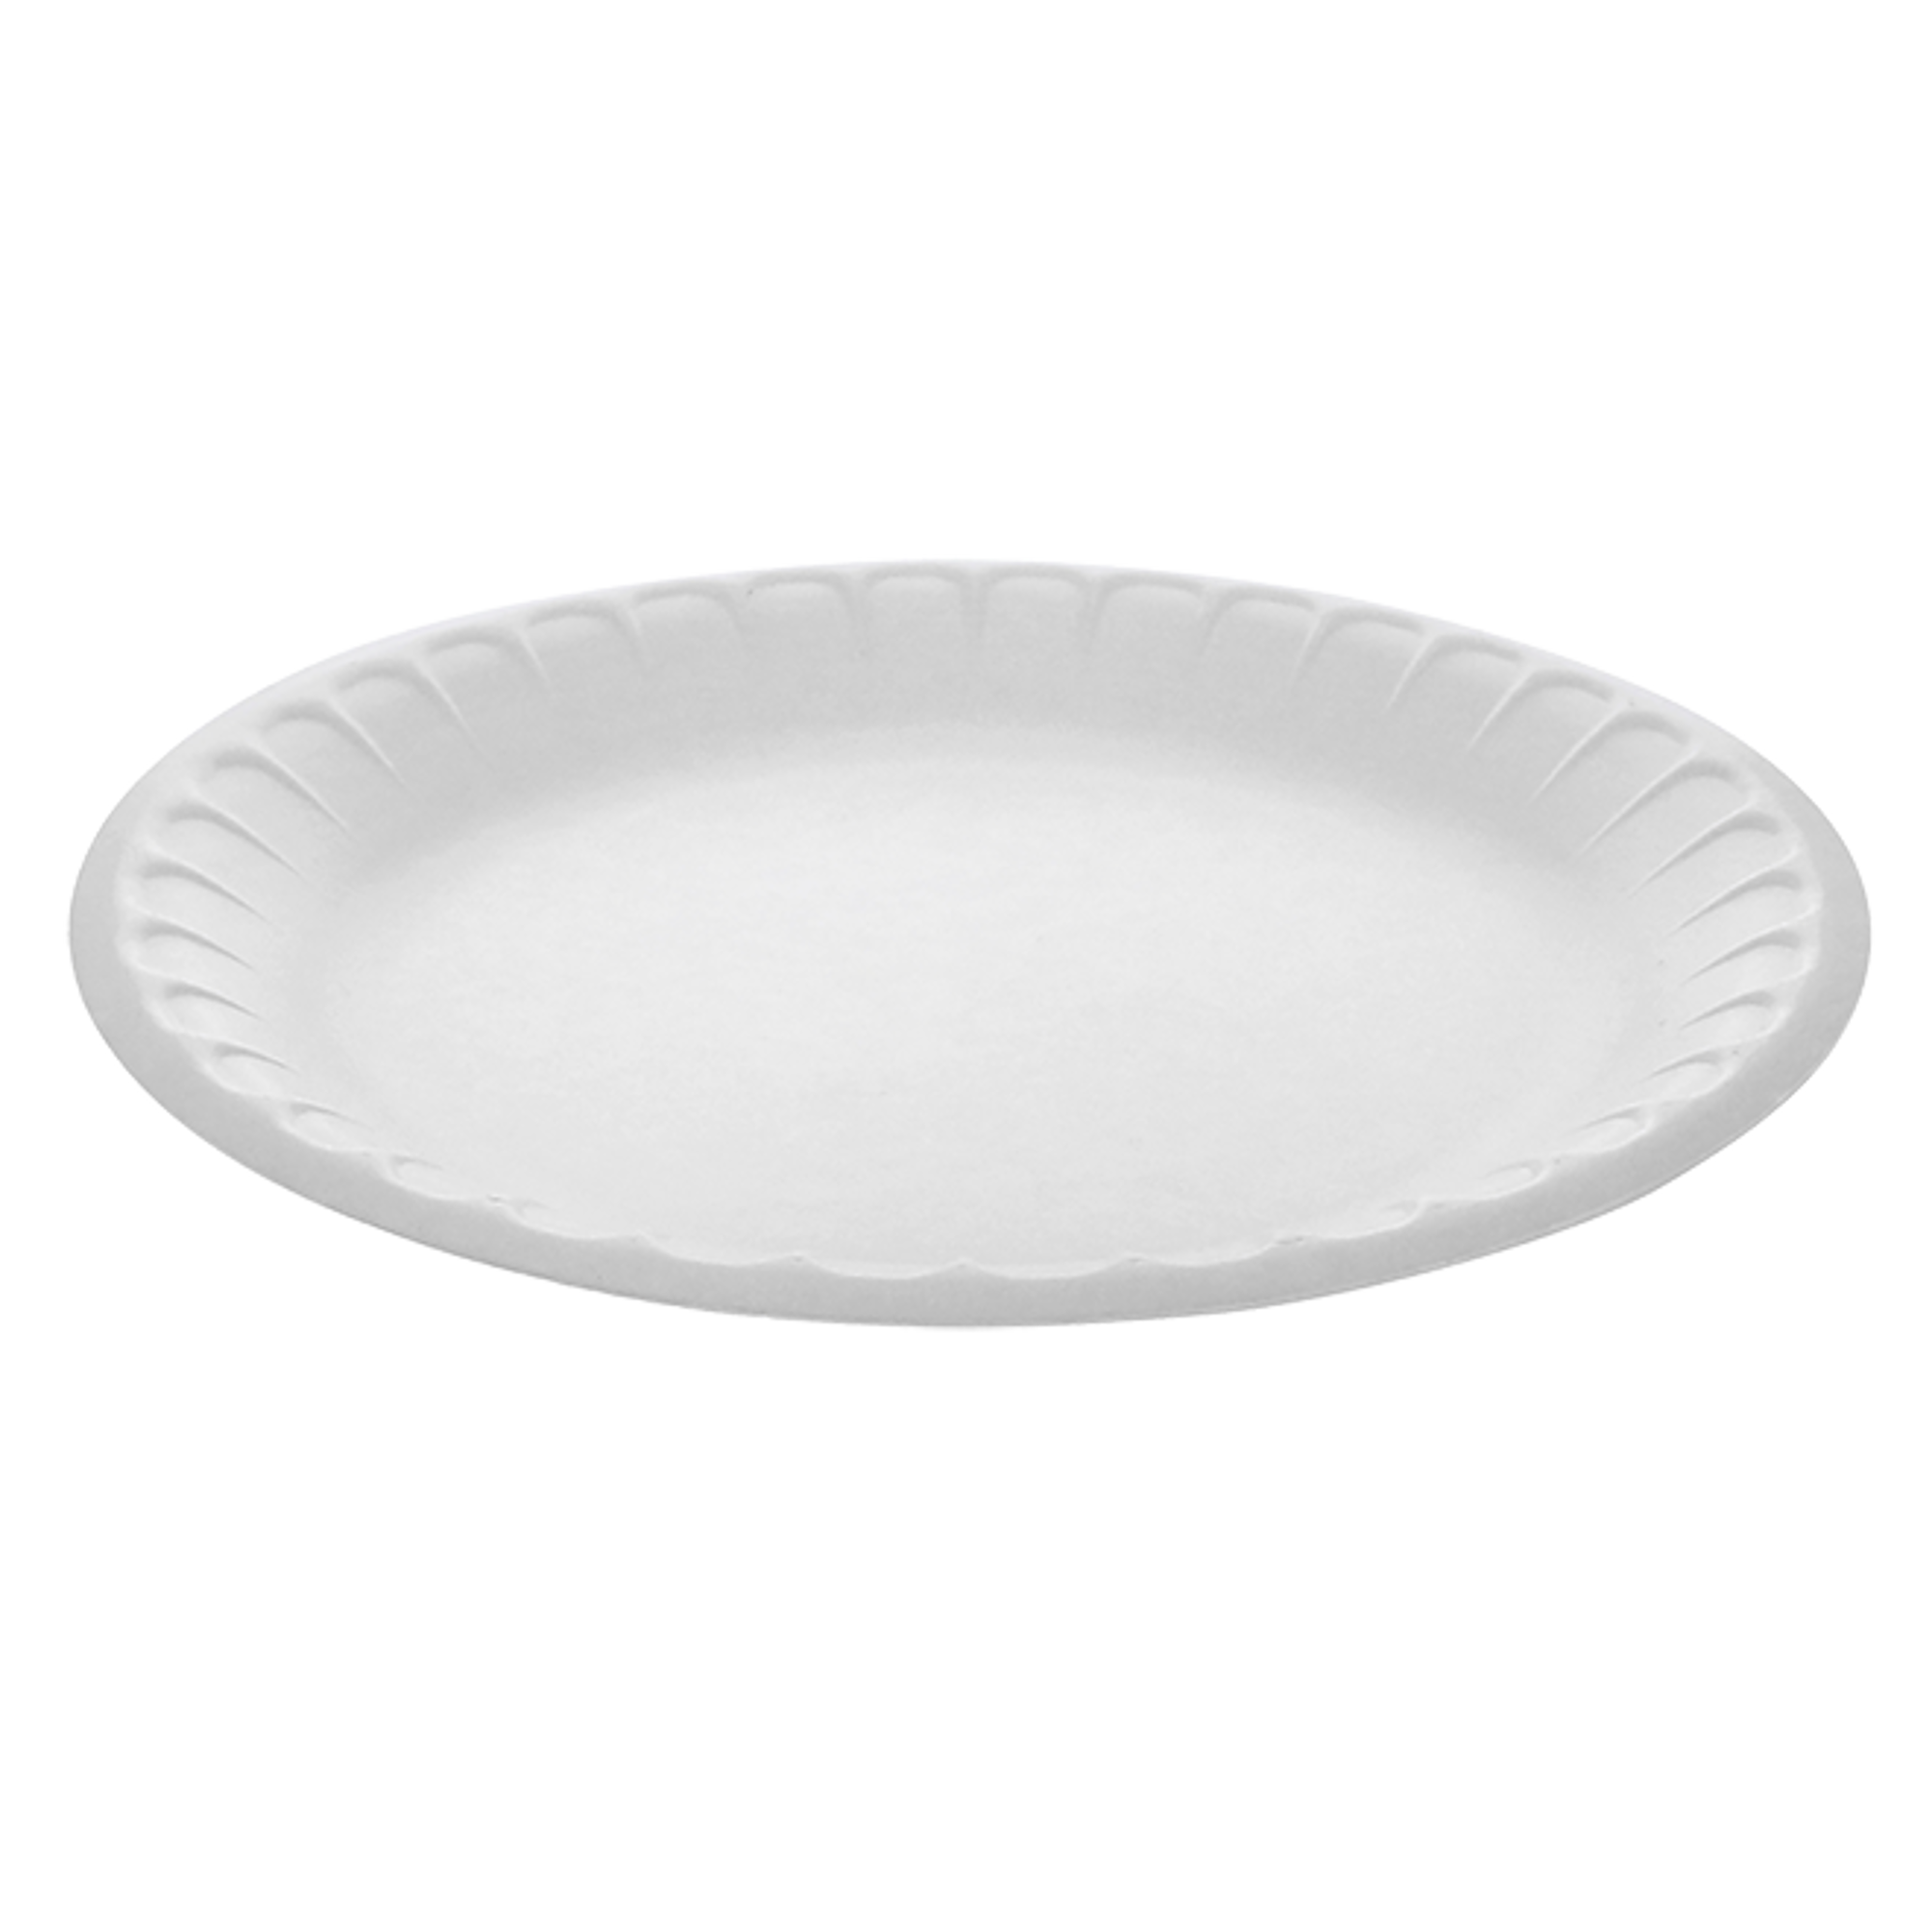 Pactiv Evergreen Placesetter Deluxe Laminated Foam Dinnerware, Plate, 8.88  dia, White, 500/Carton